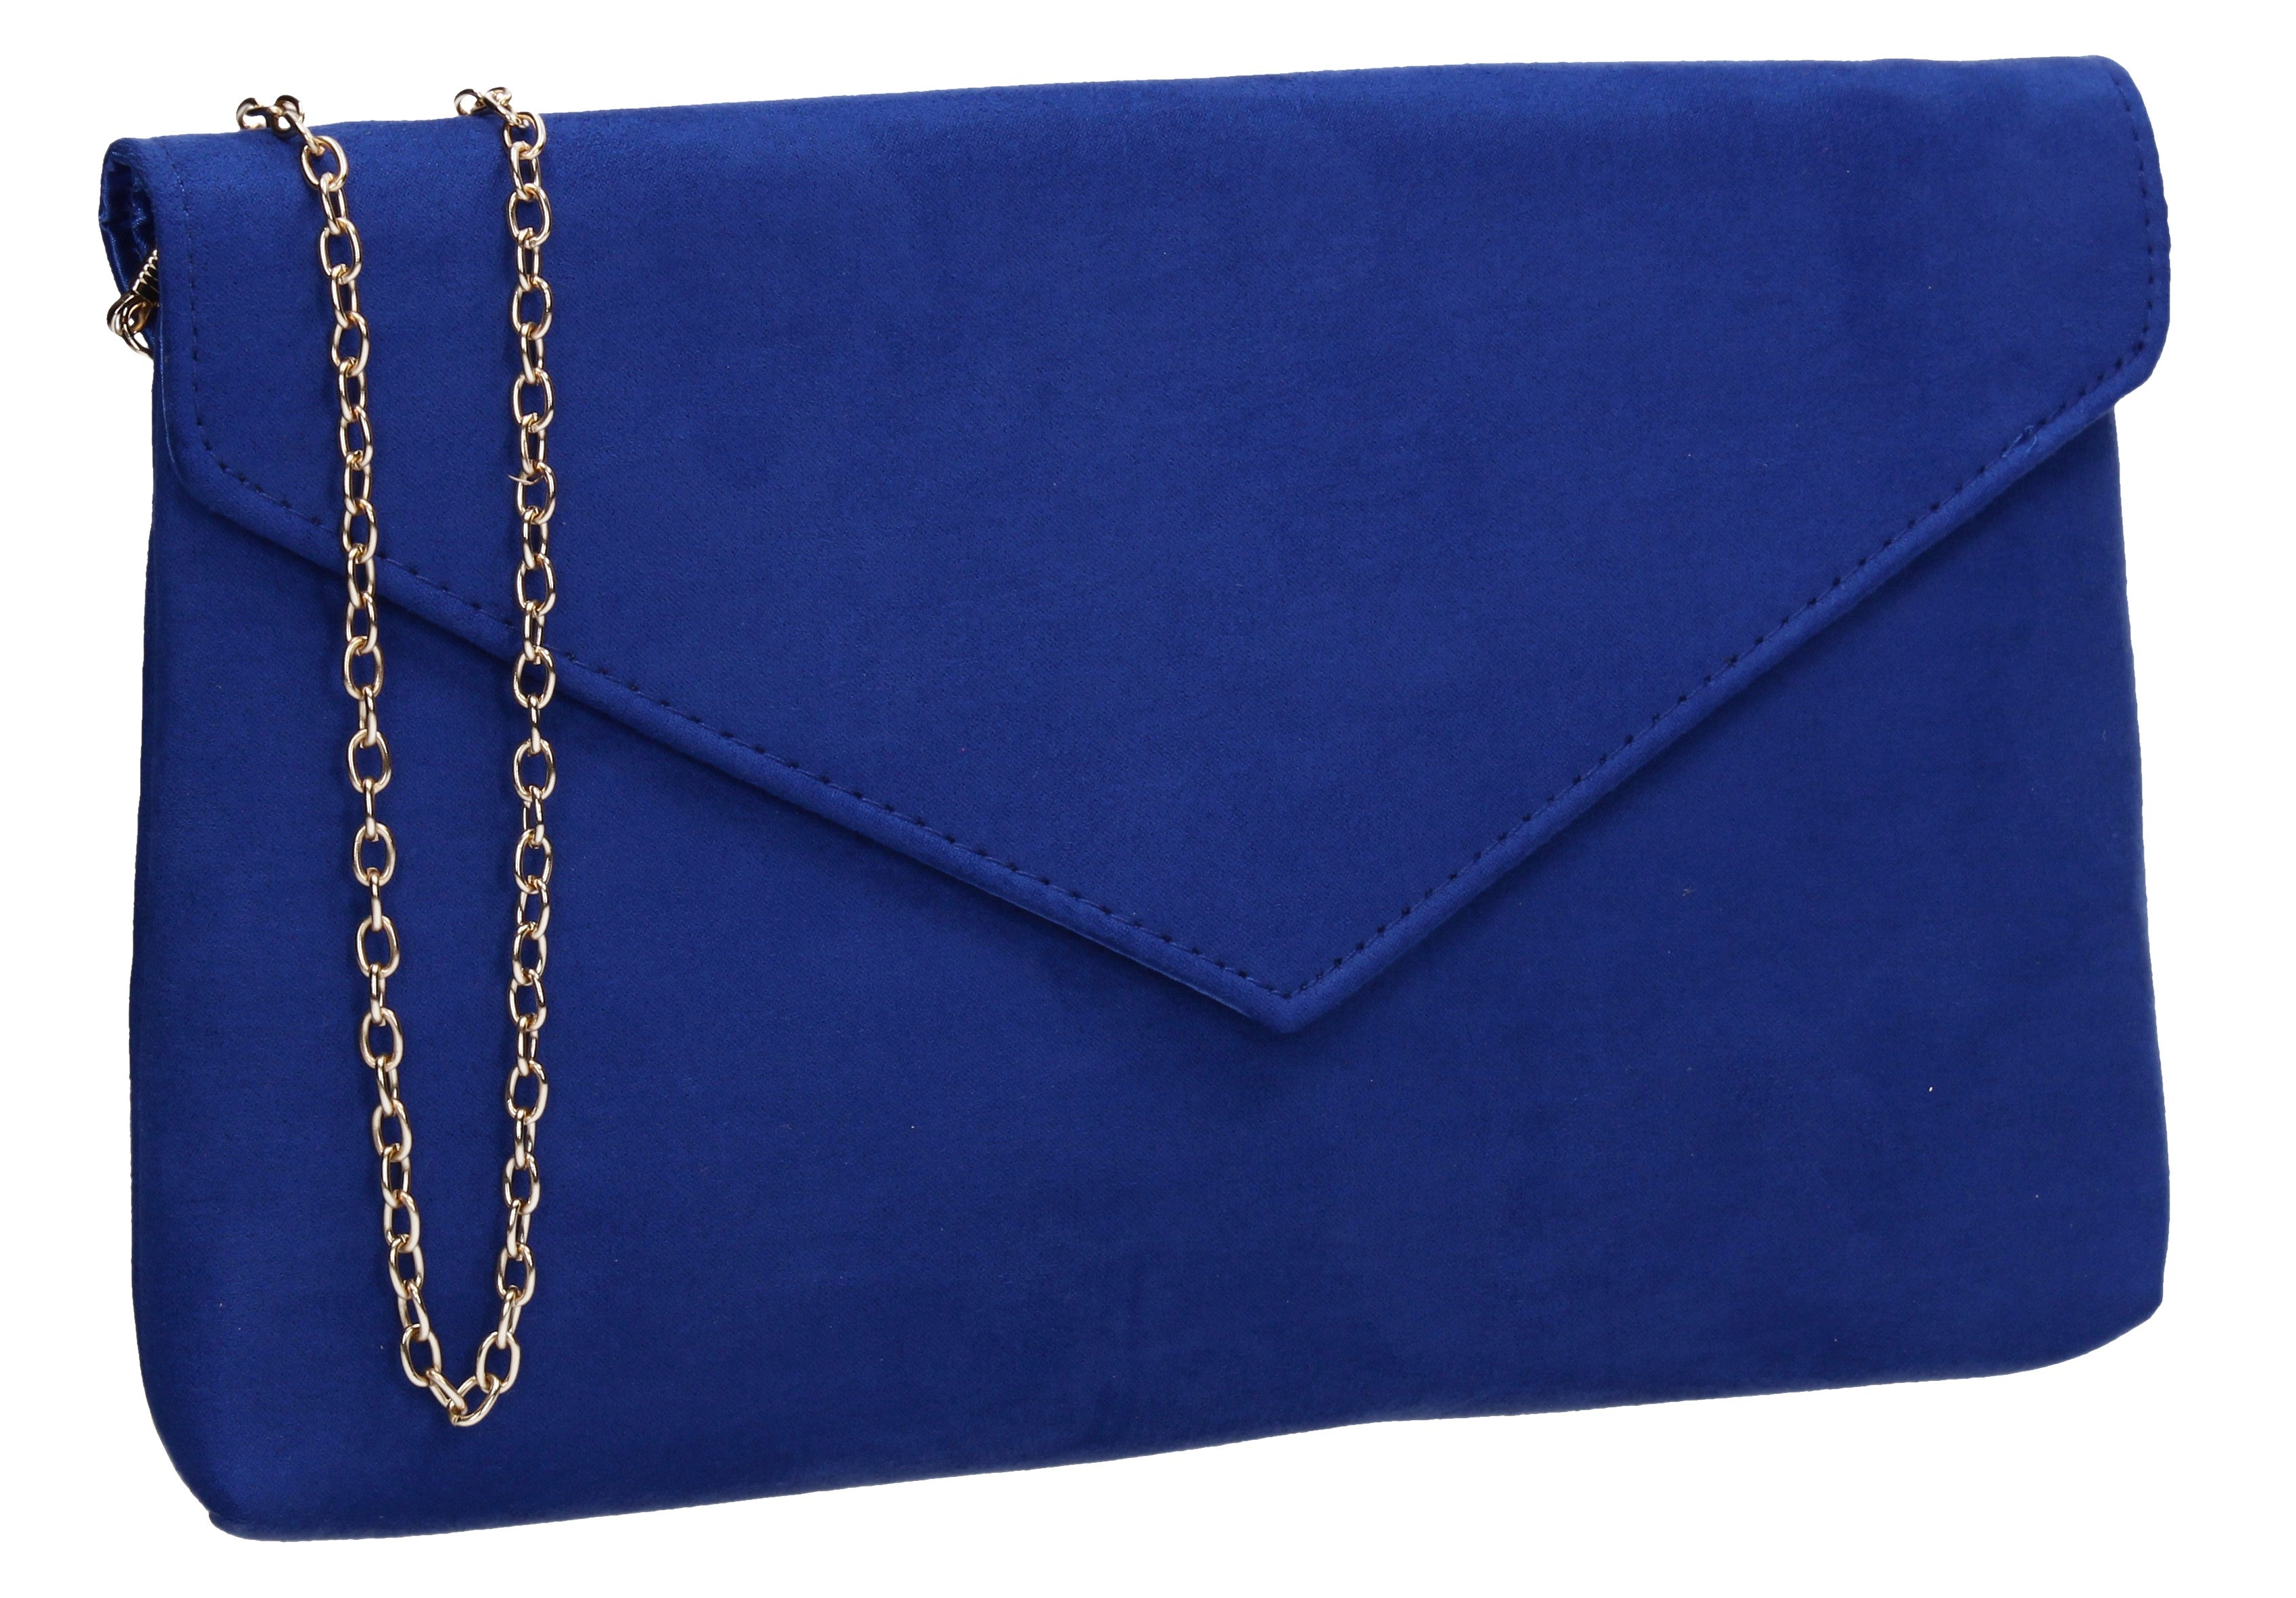 15 Cool Designer Handbags Your Closet Needs This Year | Designer crossbody  bags, Popular handbags, Handbag outfit